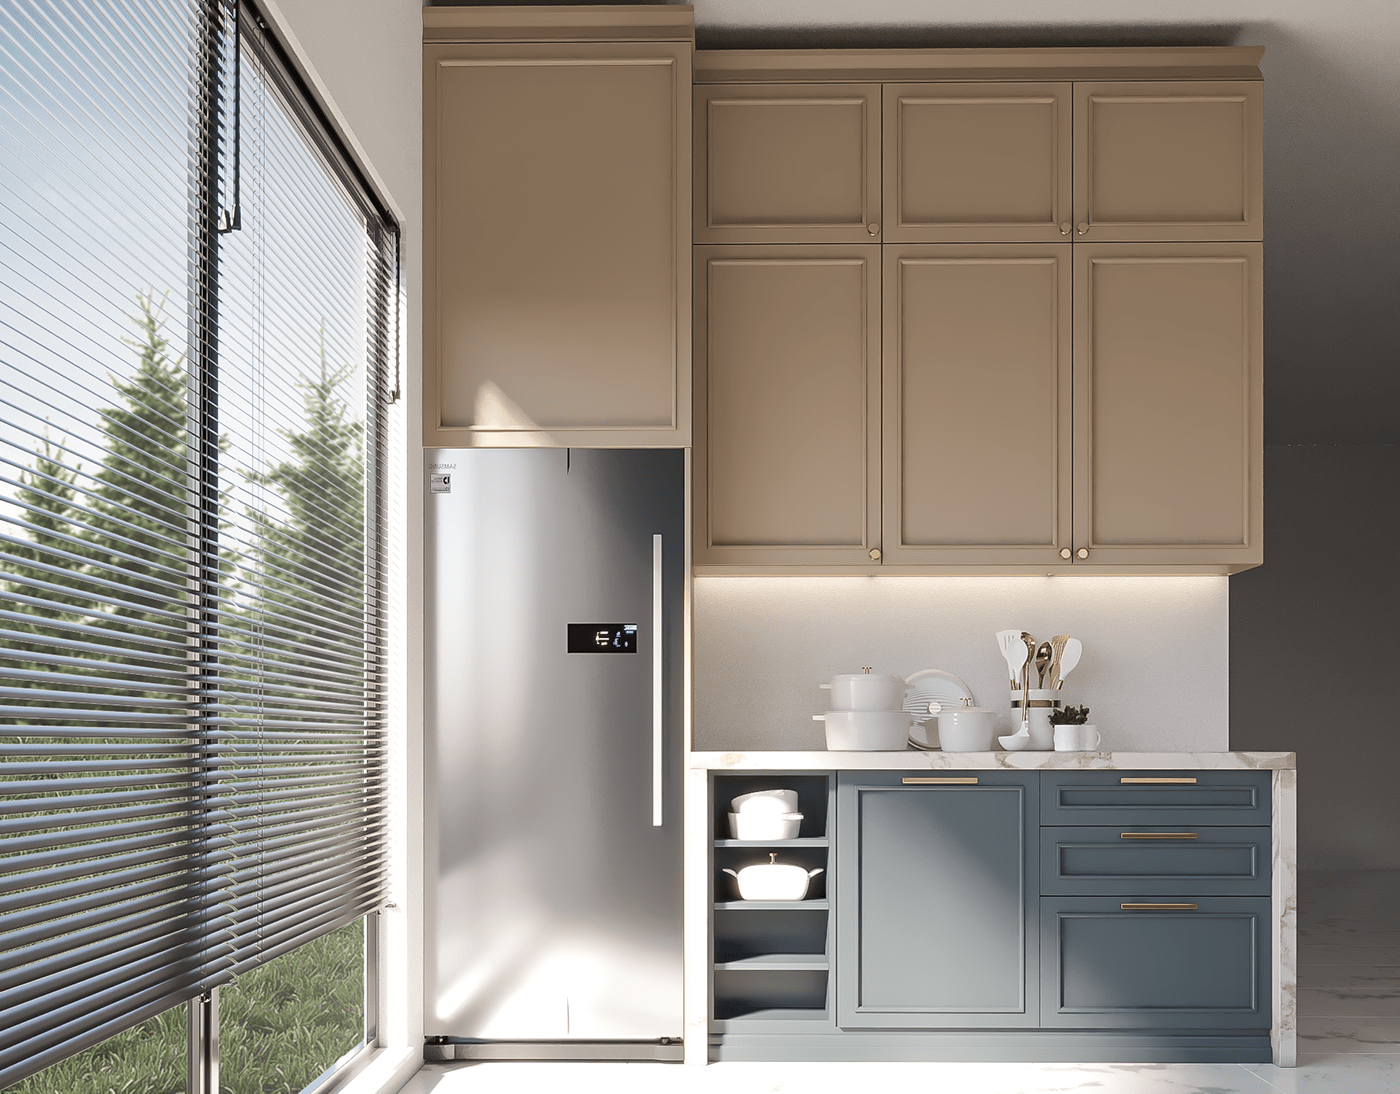 interior design  residential kitchen visualization Render architecture corona 3ds max